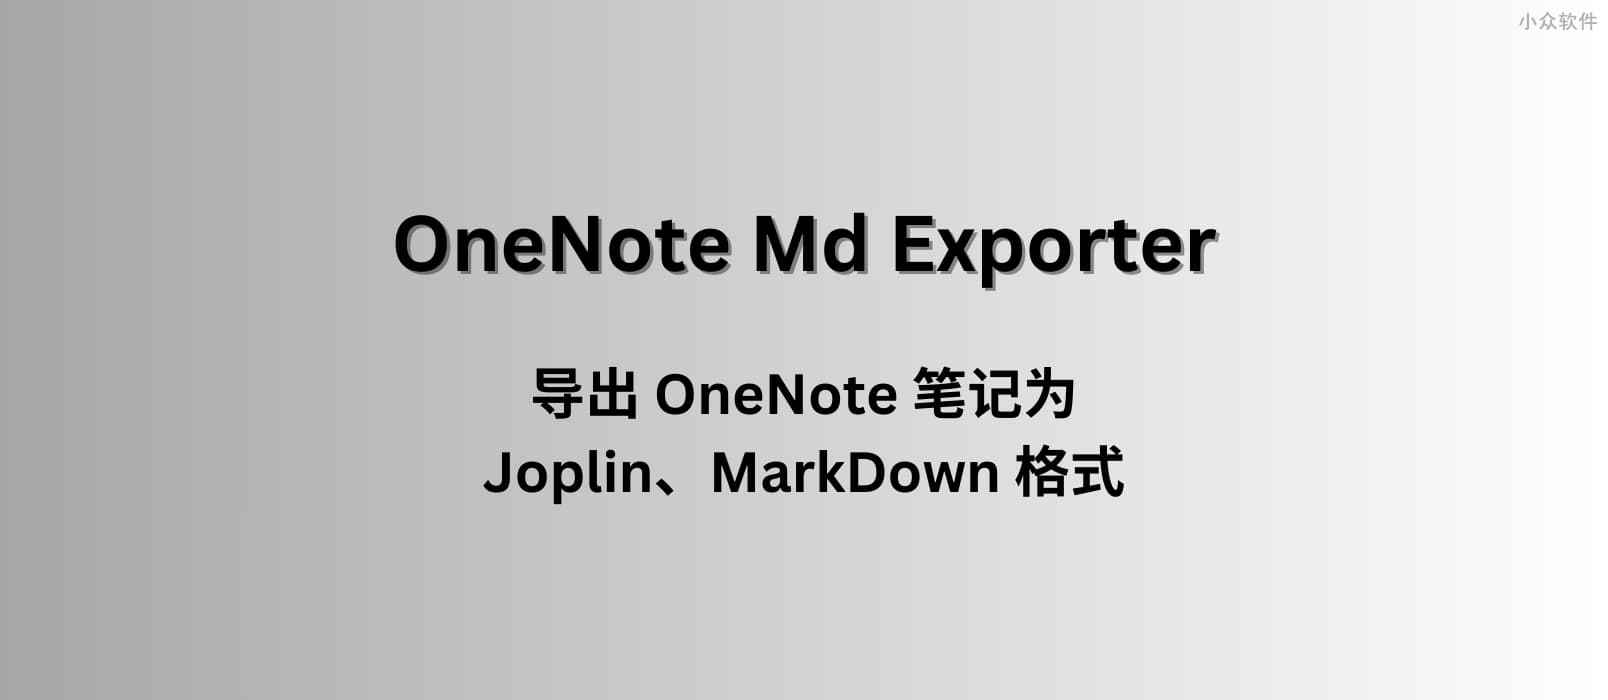 OneNote Md Exporter – 一键导出 OneNote 笔记为 Joplin、MarkDown 格式[Windows]